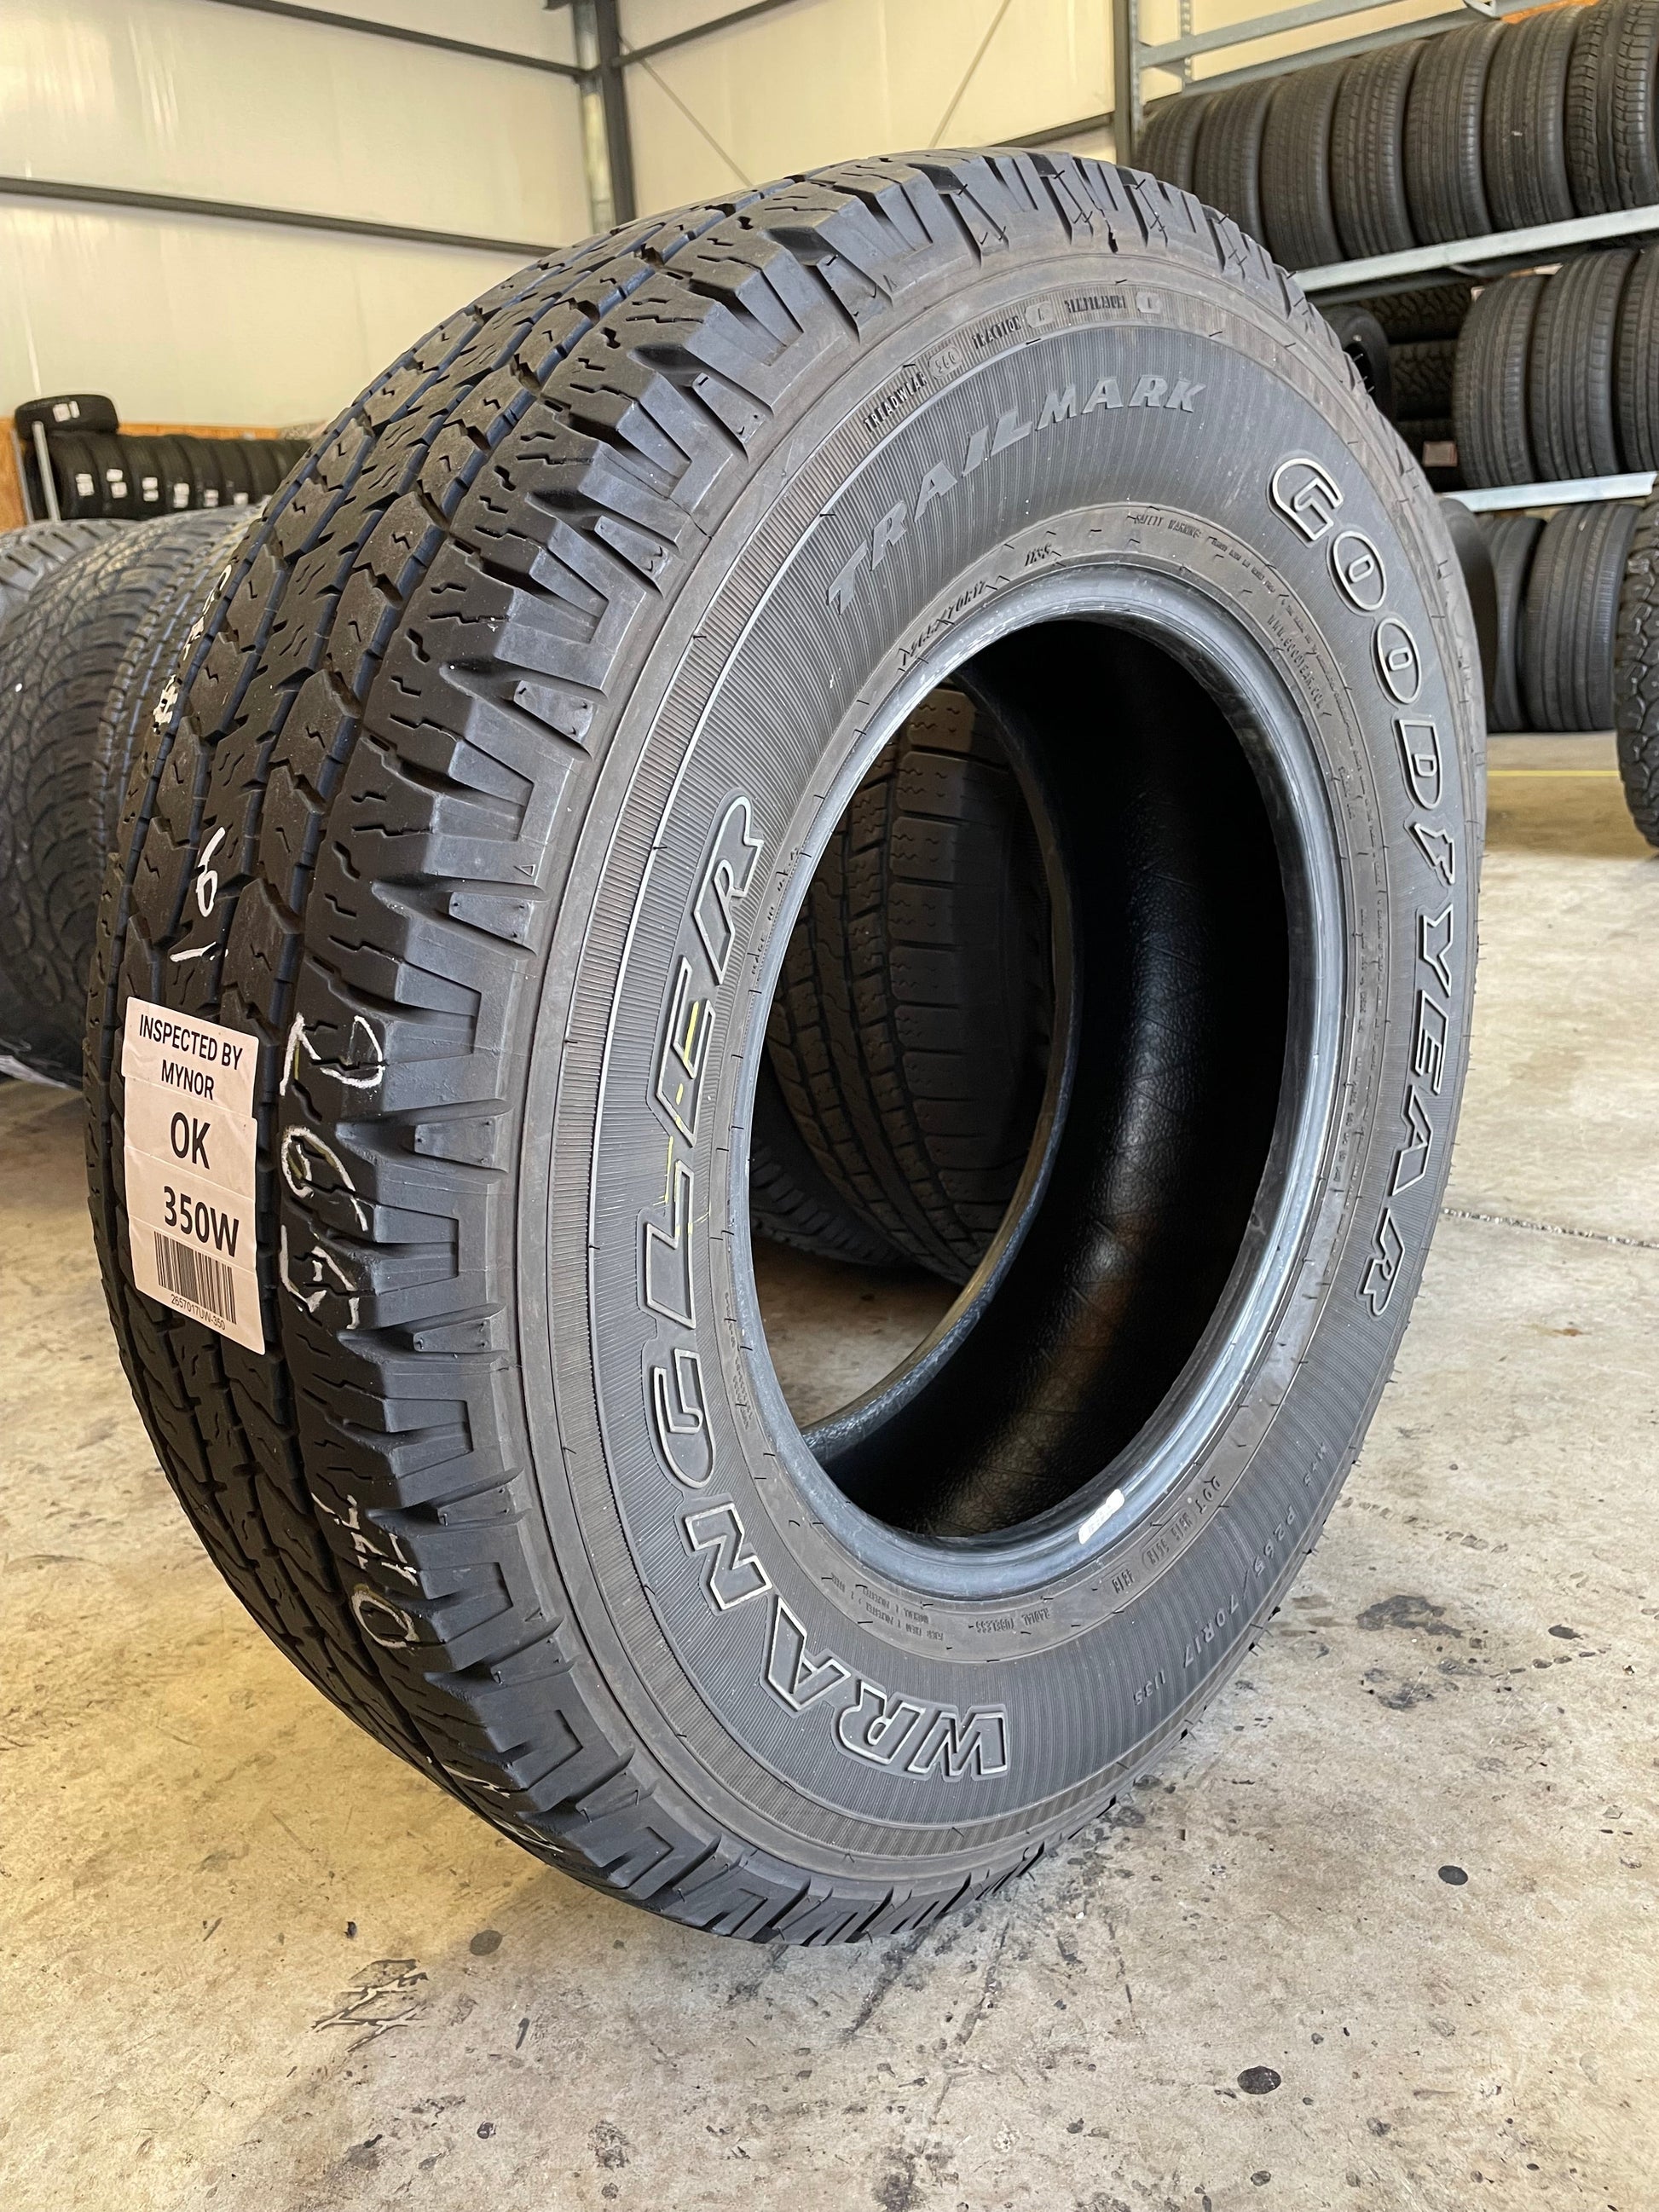 SINGLE 265/70R17 Goodyear Wrangler Trailmark 113 S SL - Used Tires – High  Tread Used Tires